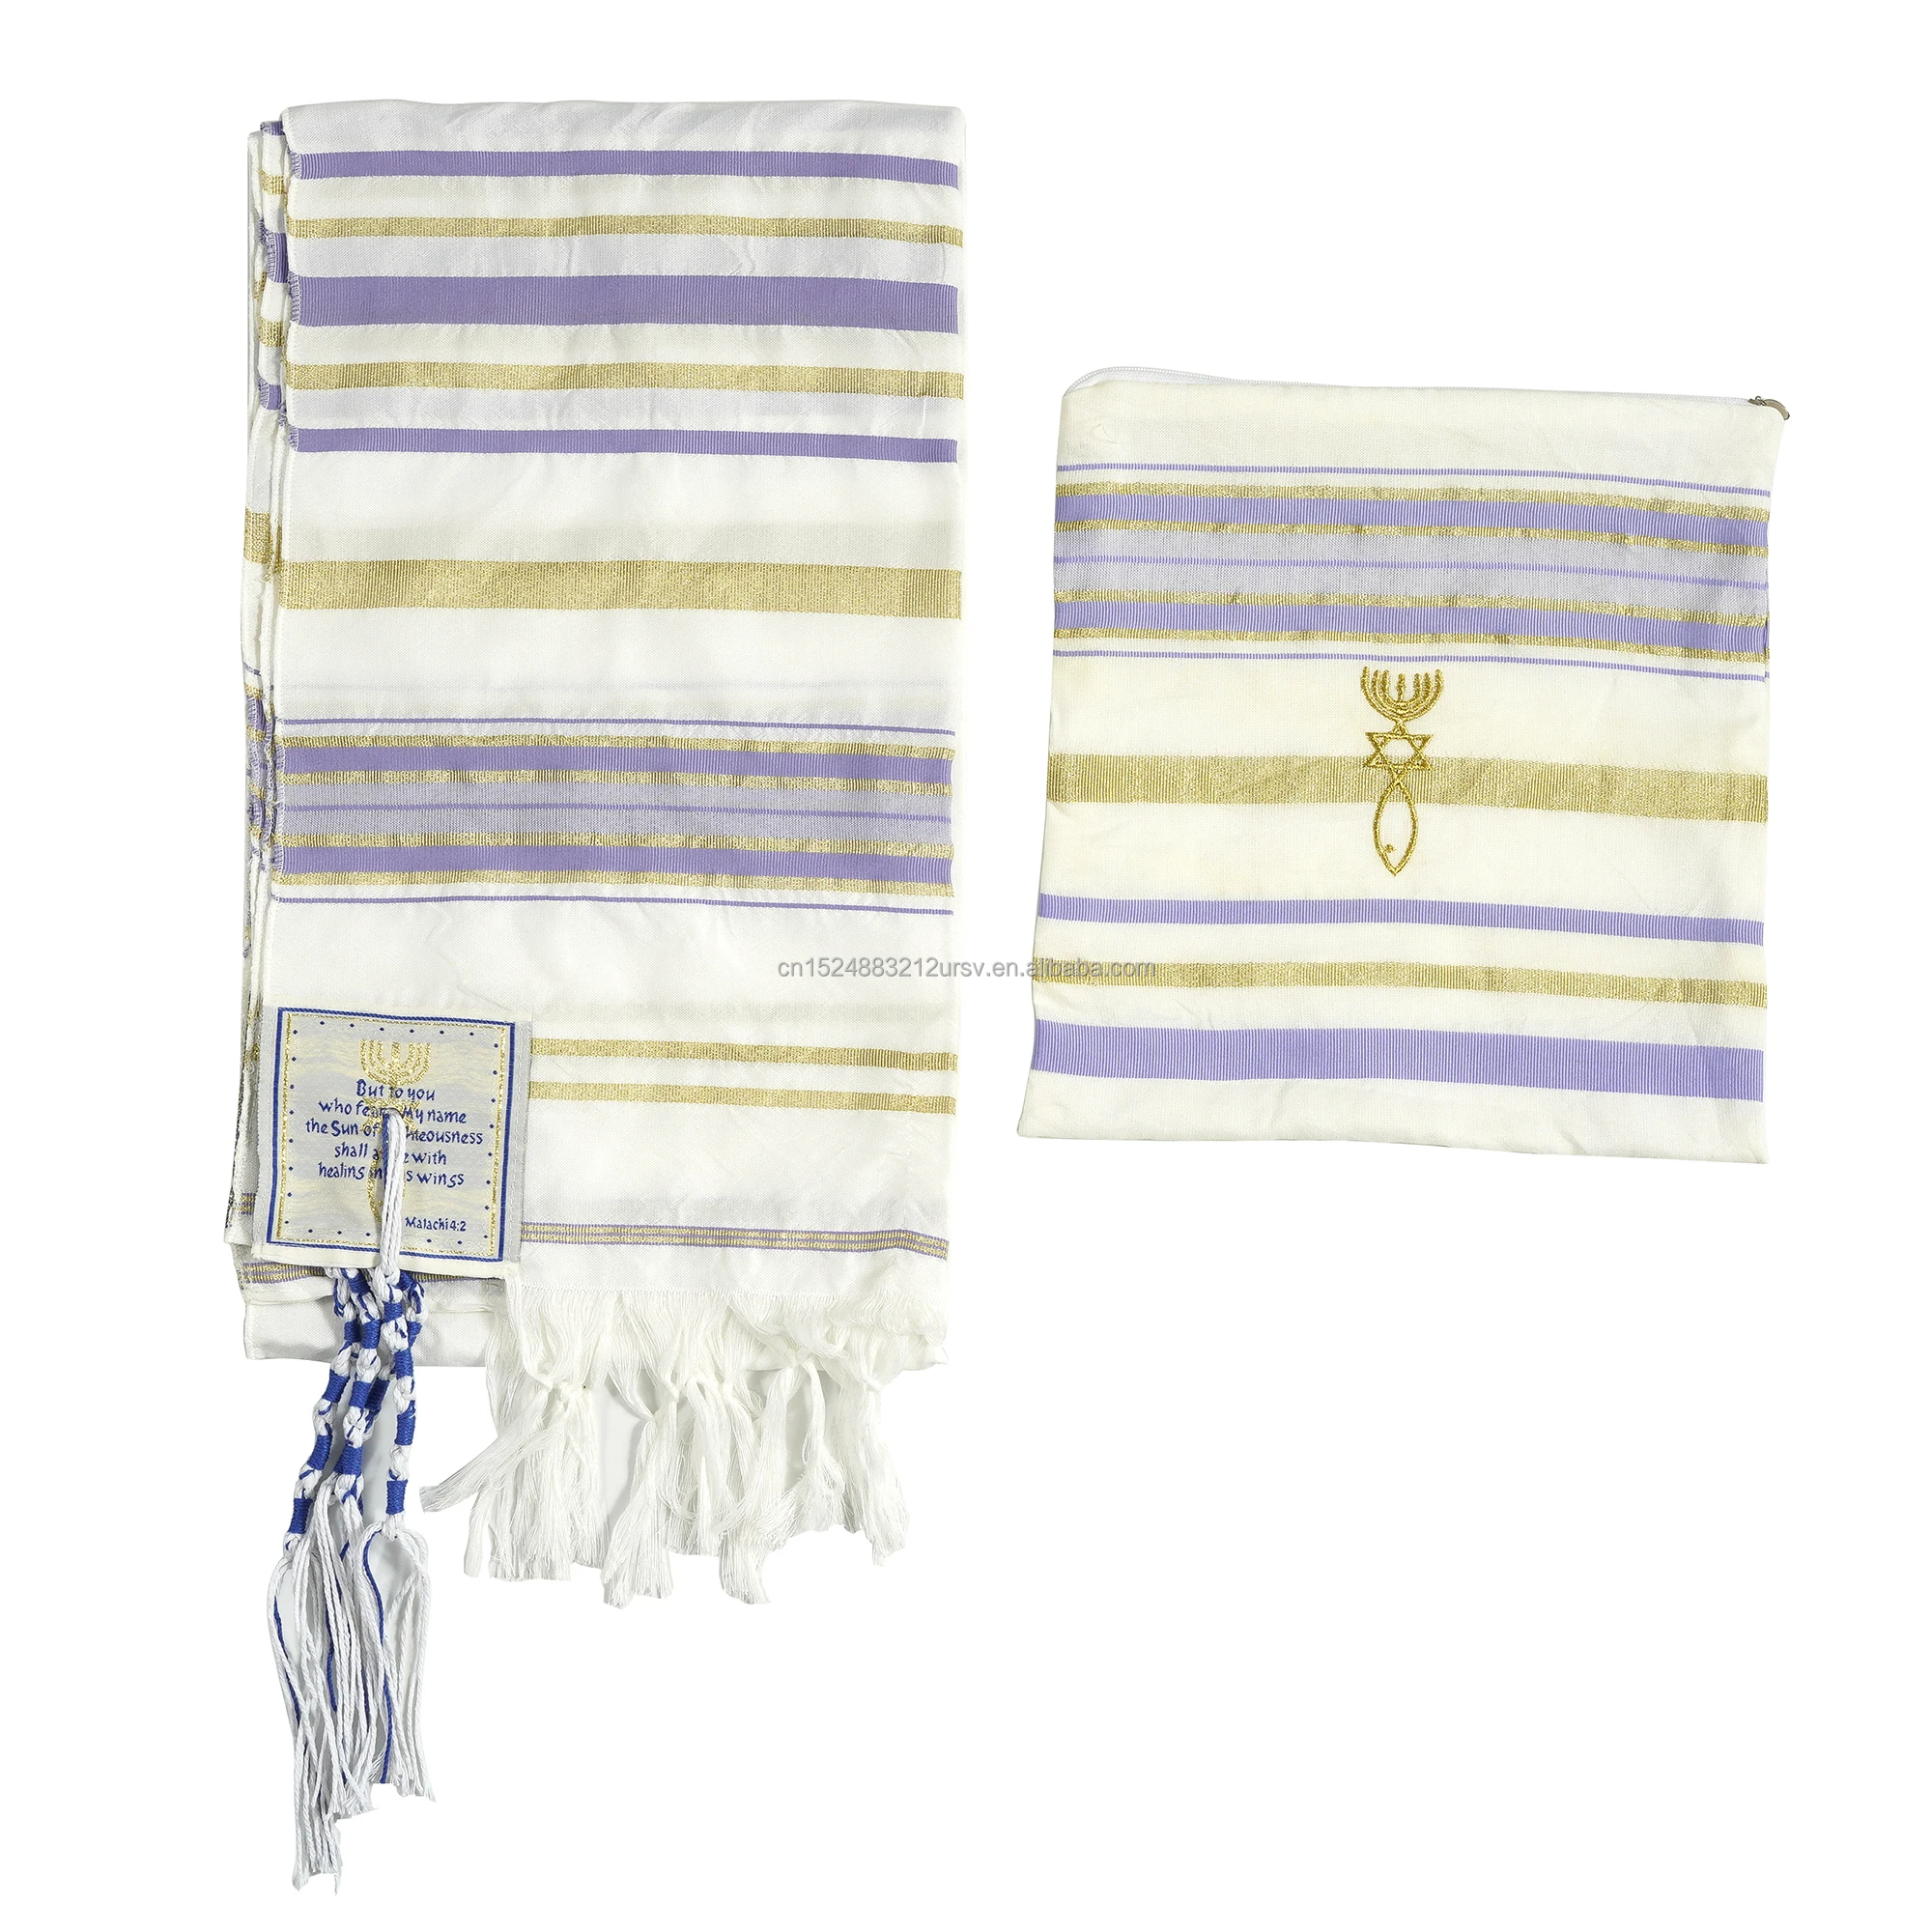 dropshipping talit prayer shawl 22x72 with